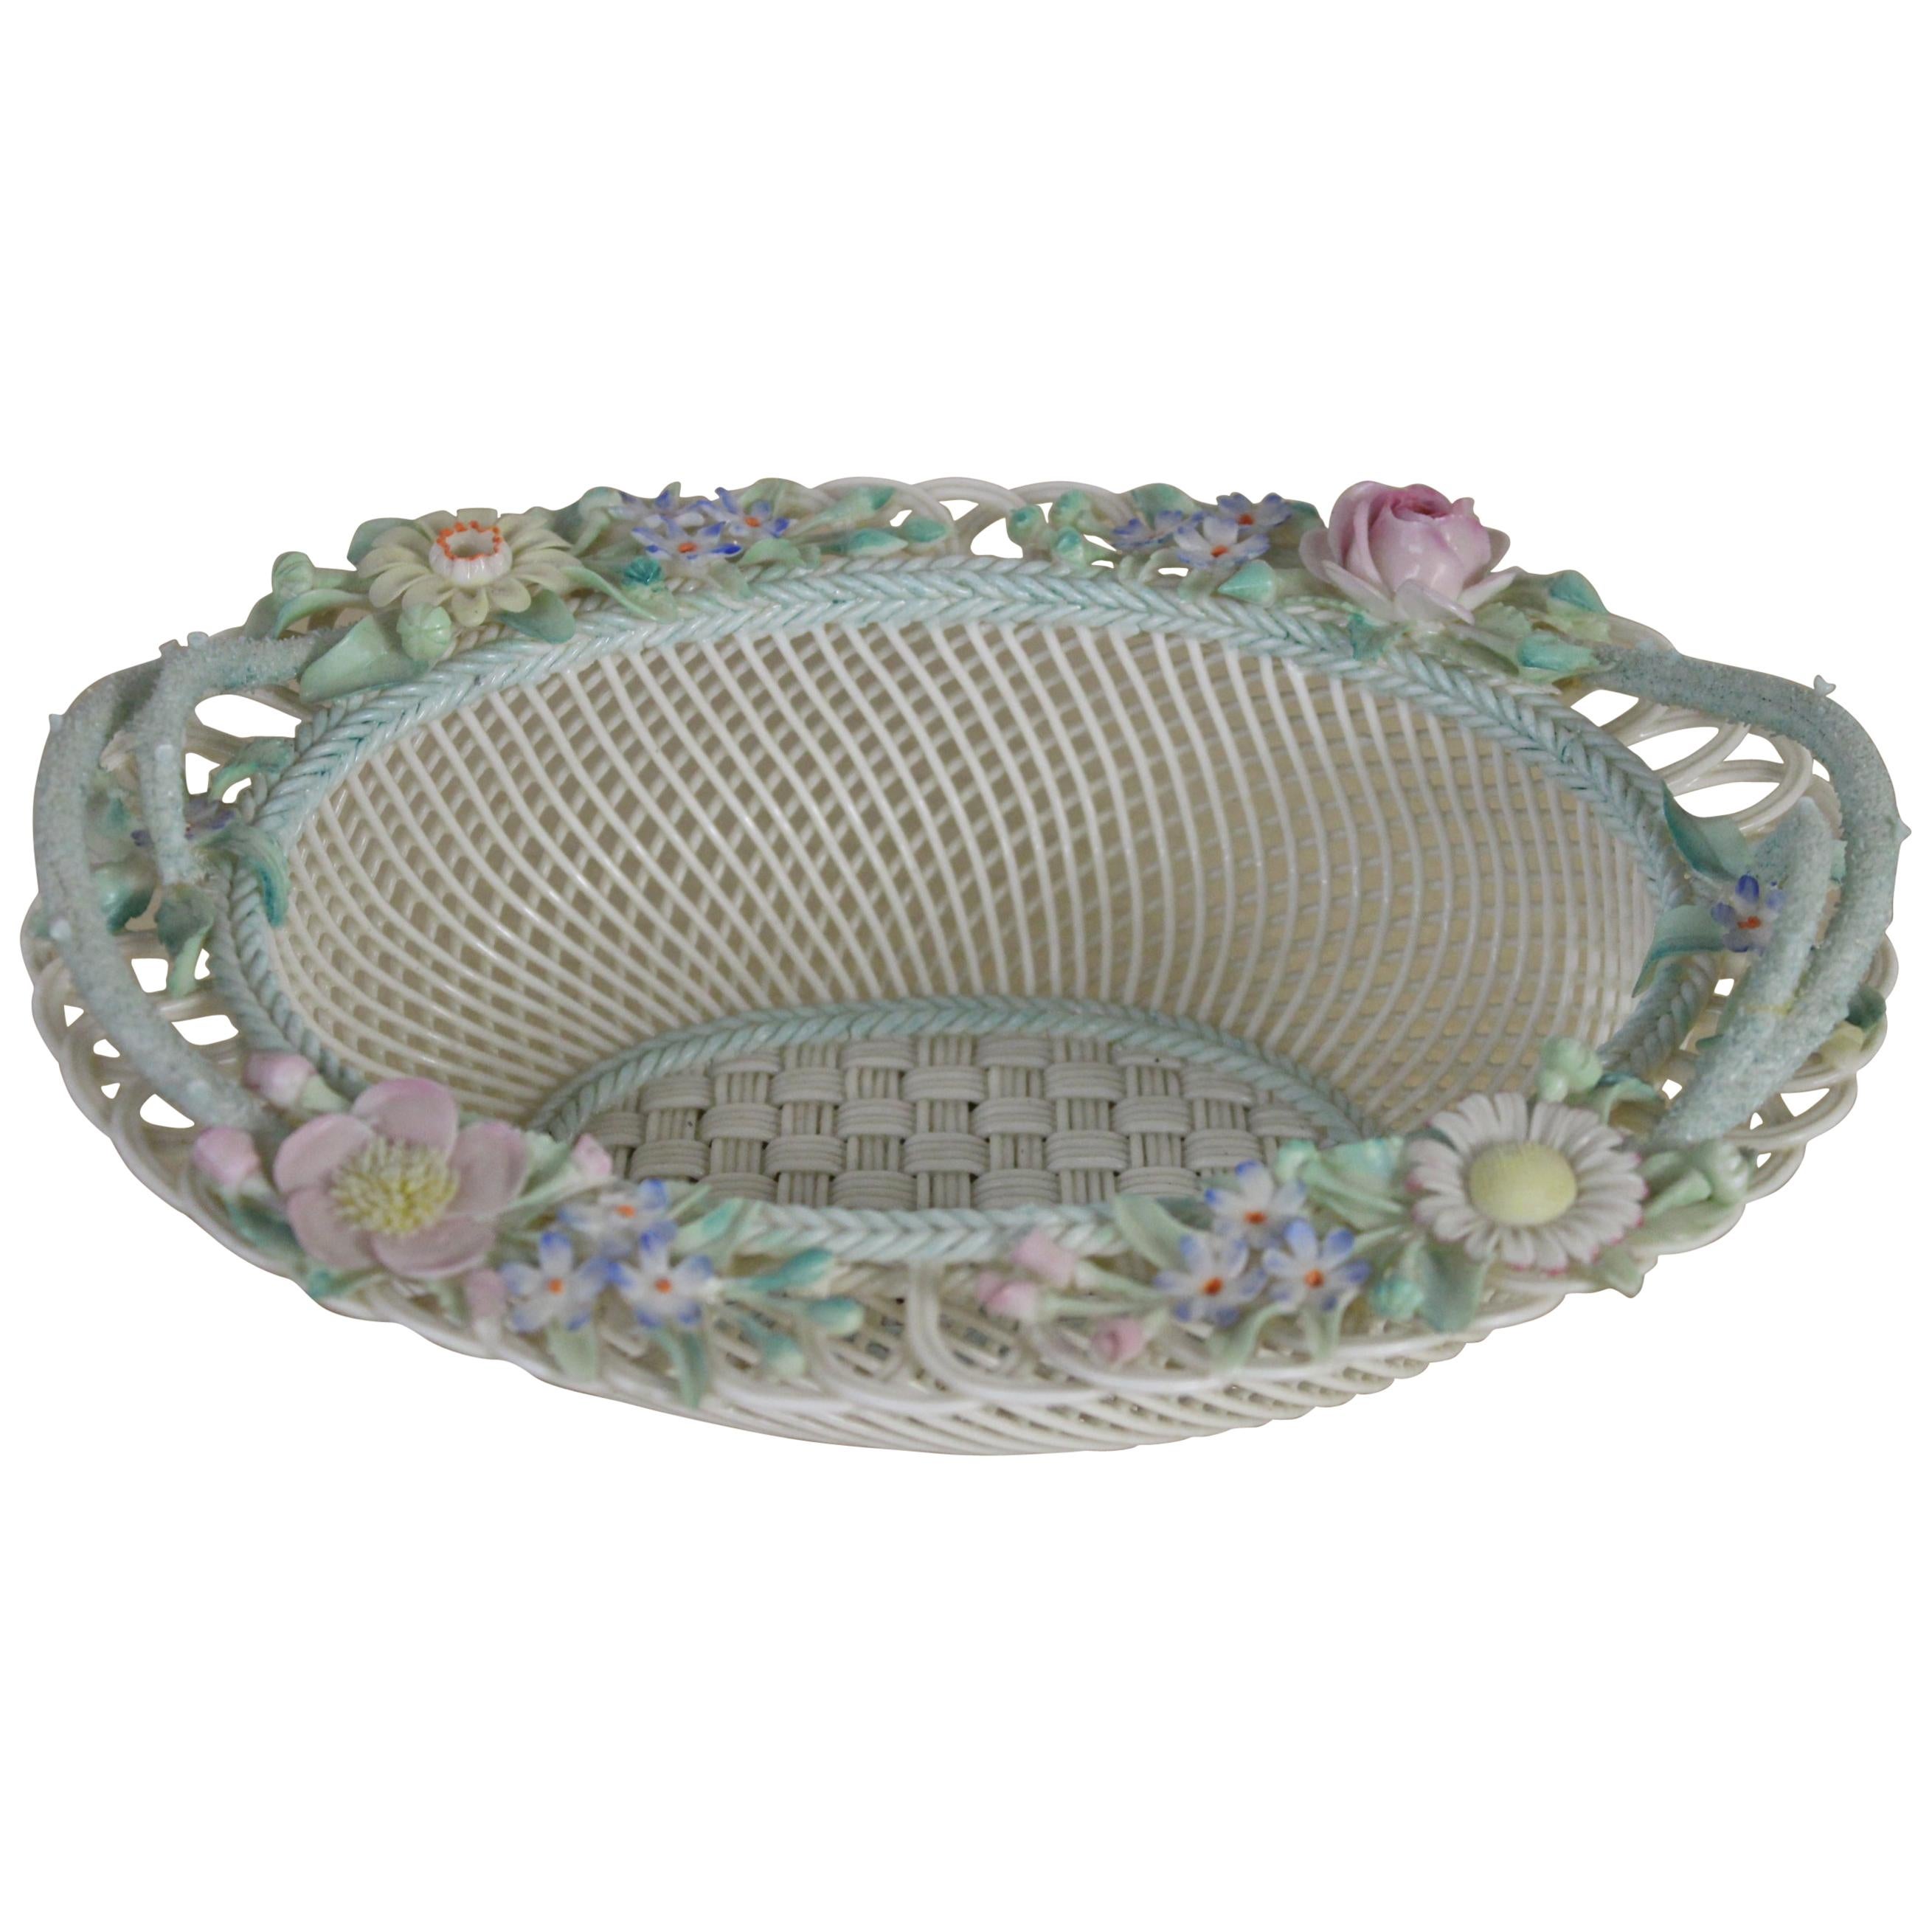 Late 19th Century Large Belleek Floral Decorated Porcelain Basket For Sale